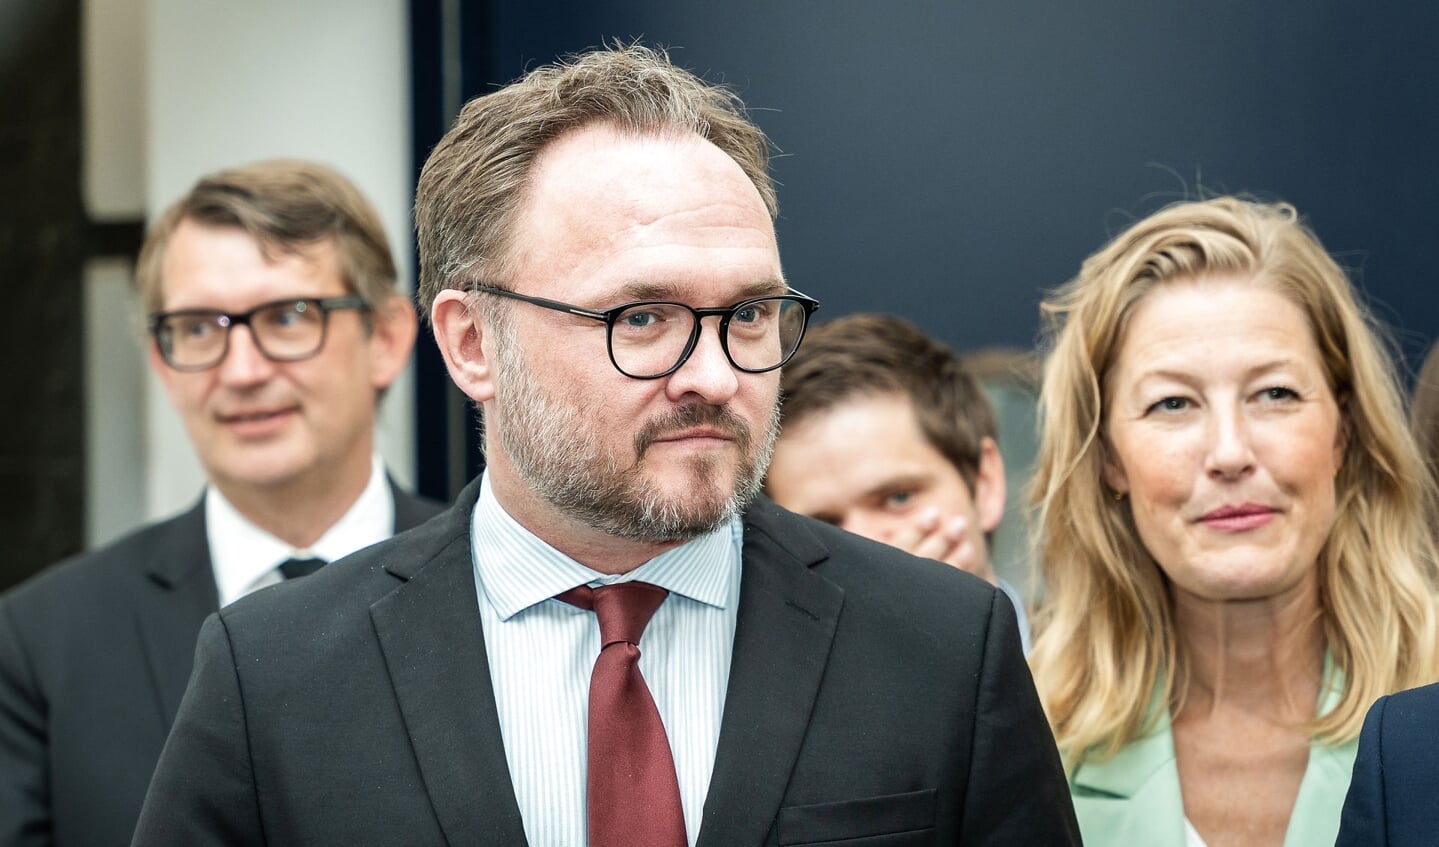 Danmarks klima-, energi- og forsyningsminister Dan Jørensen (S) siger, at Danmark bliver »et stort grønt kraftværk for hele Europa«.